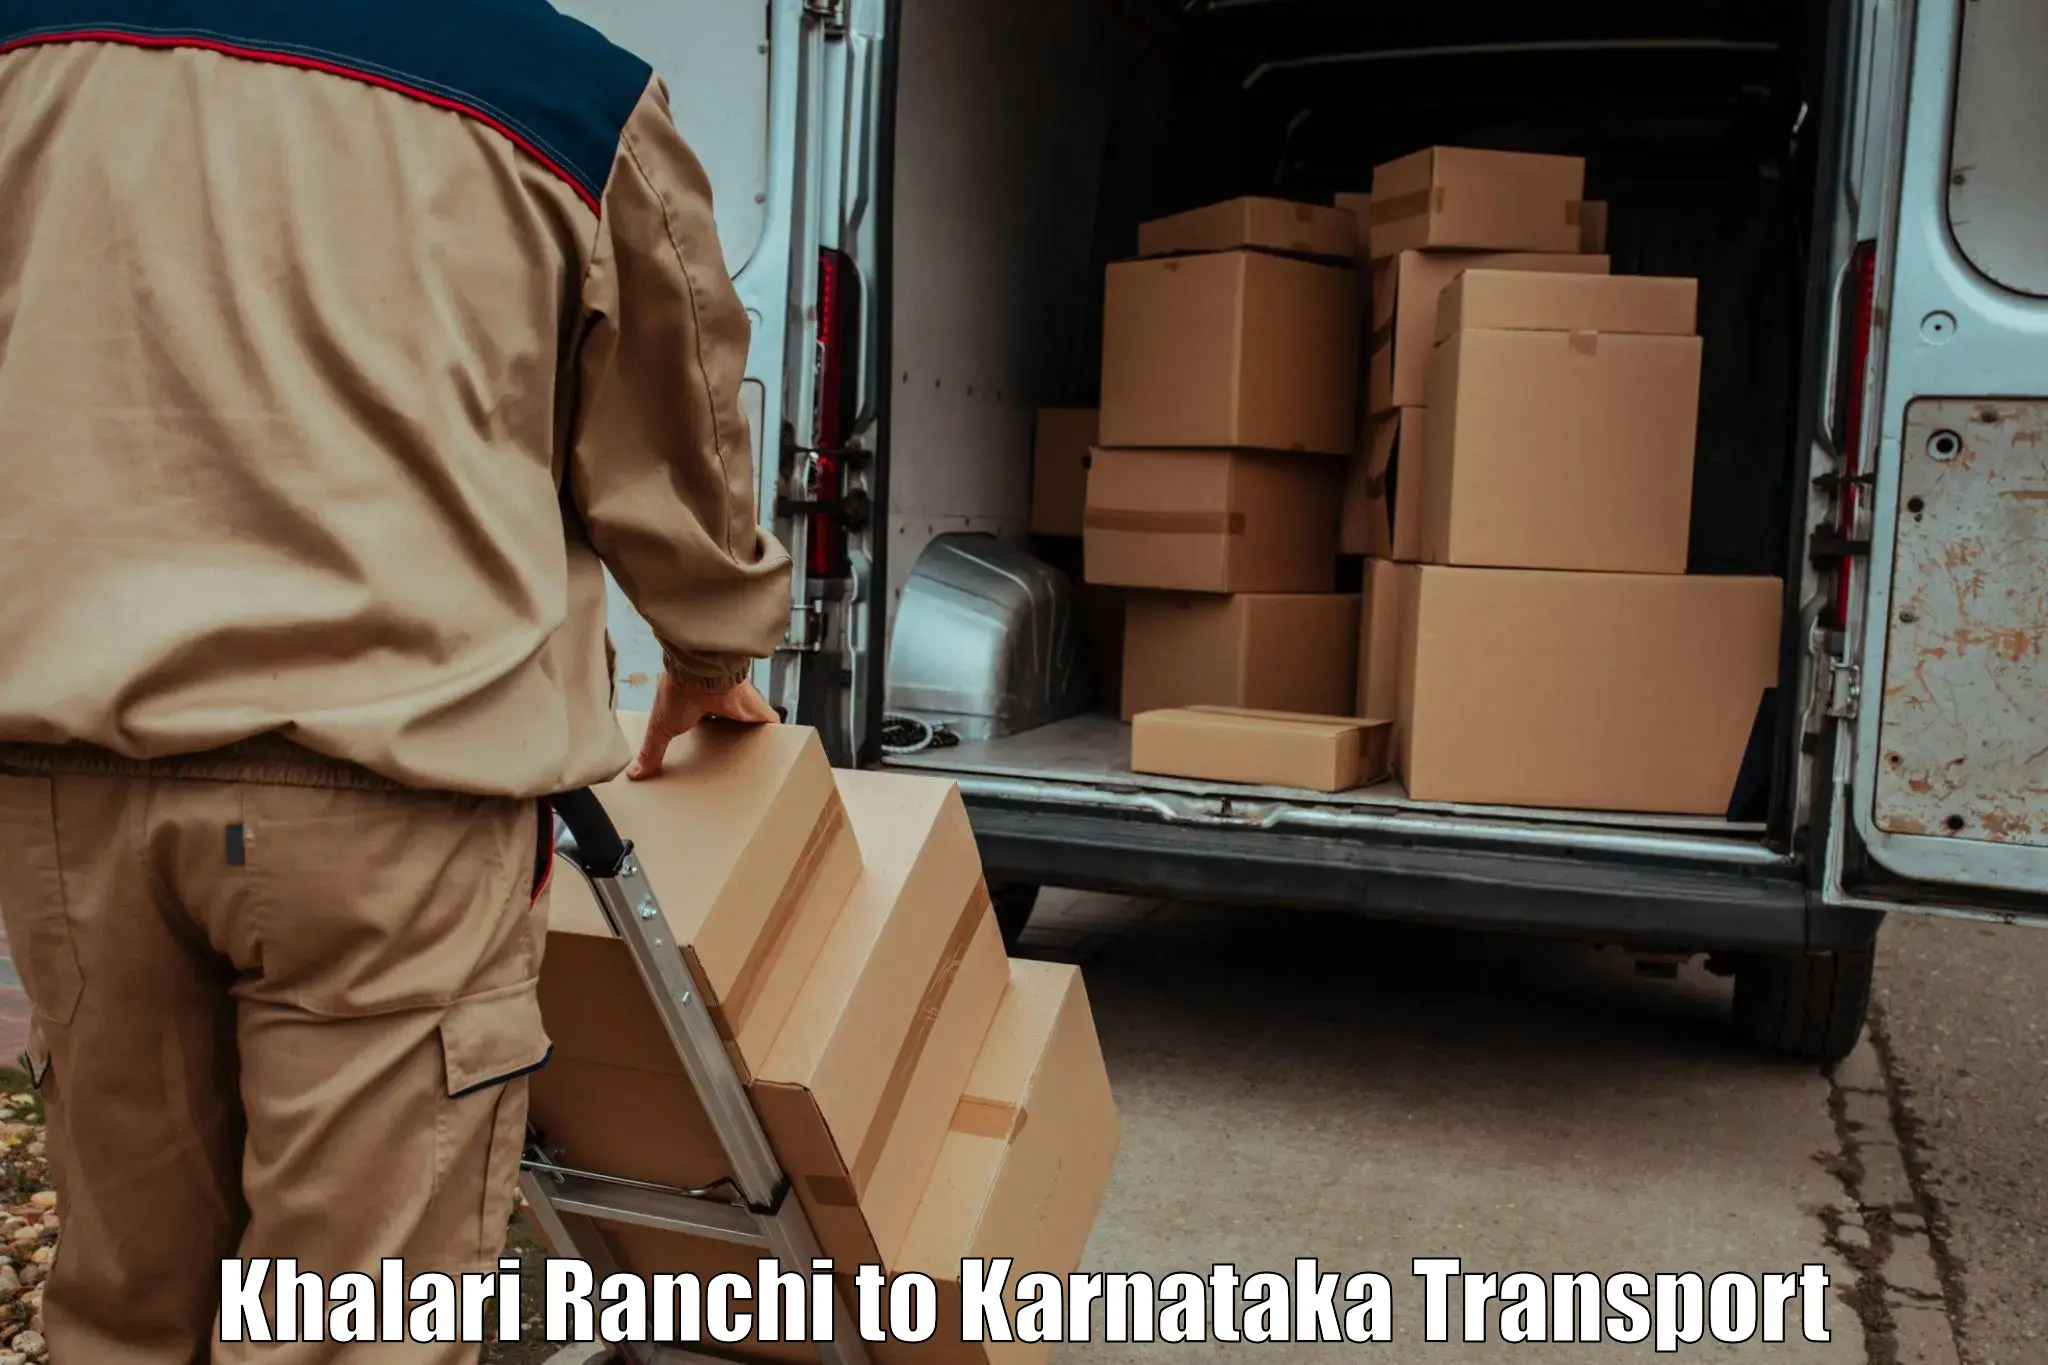 Vehicle transport services Khalari Ranchi to Karnataka